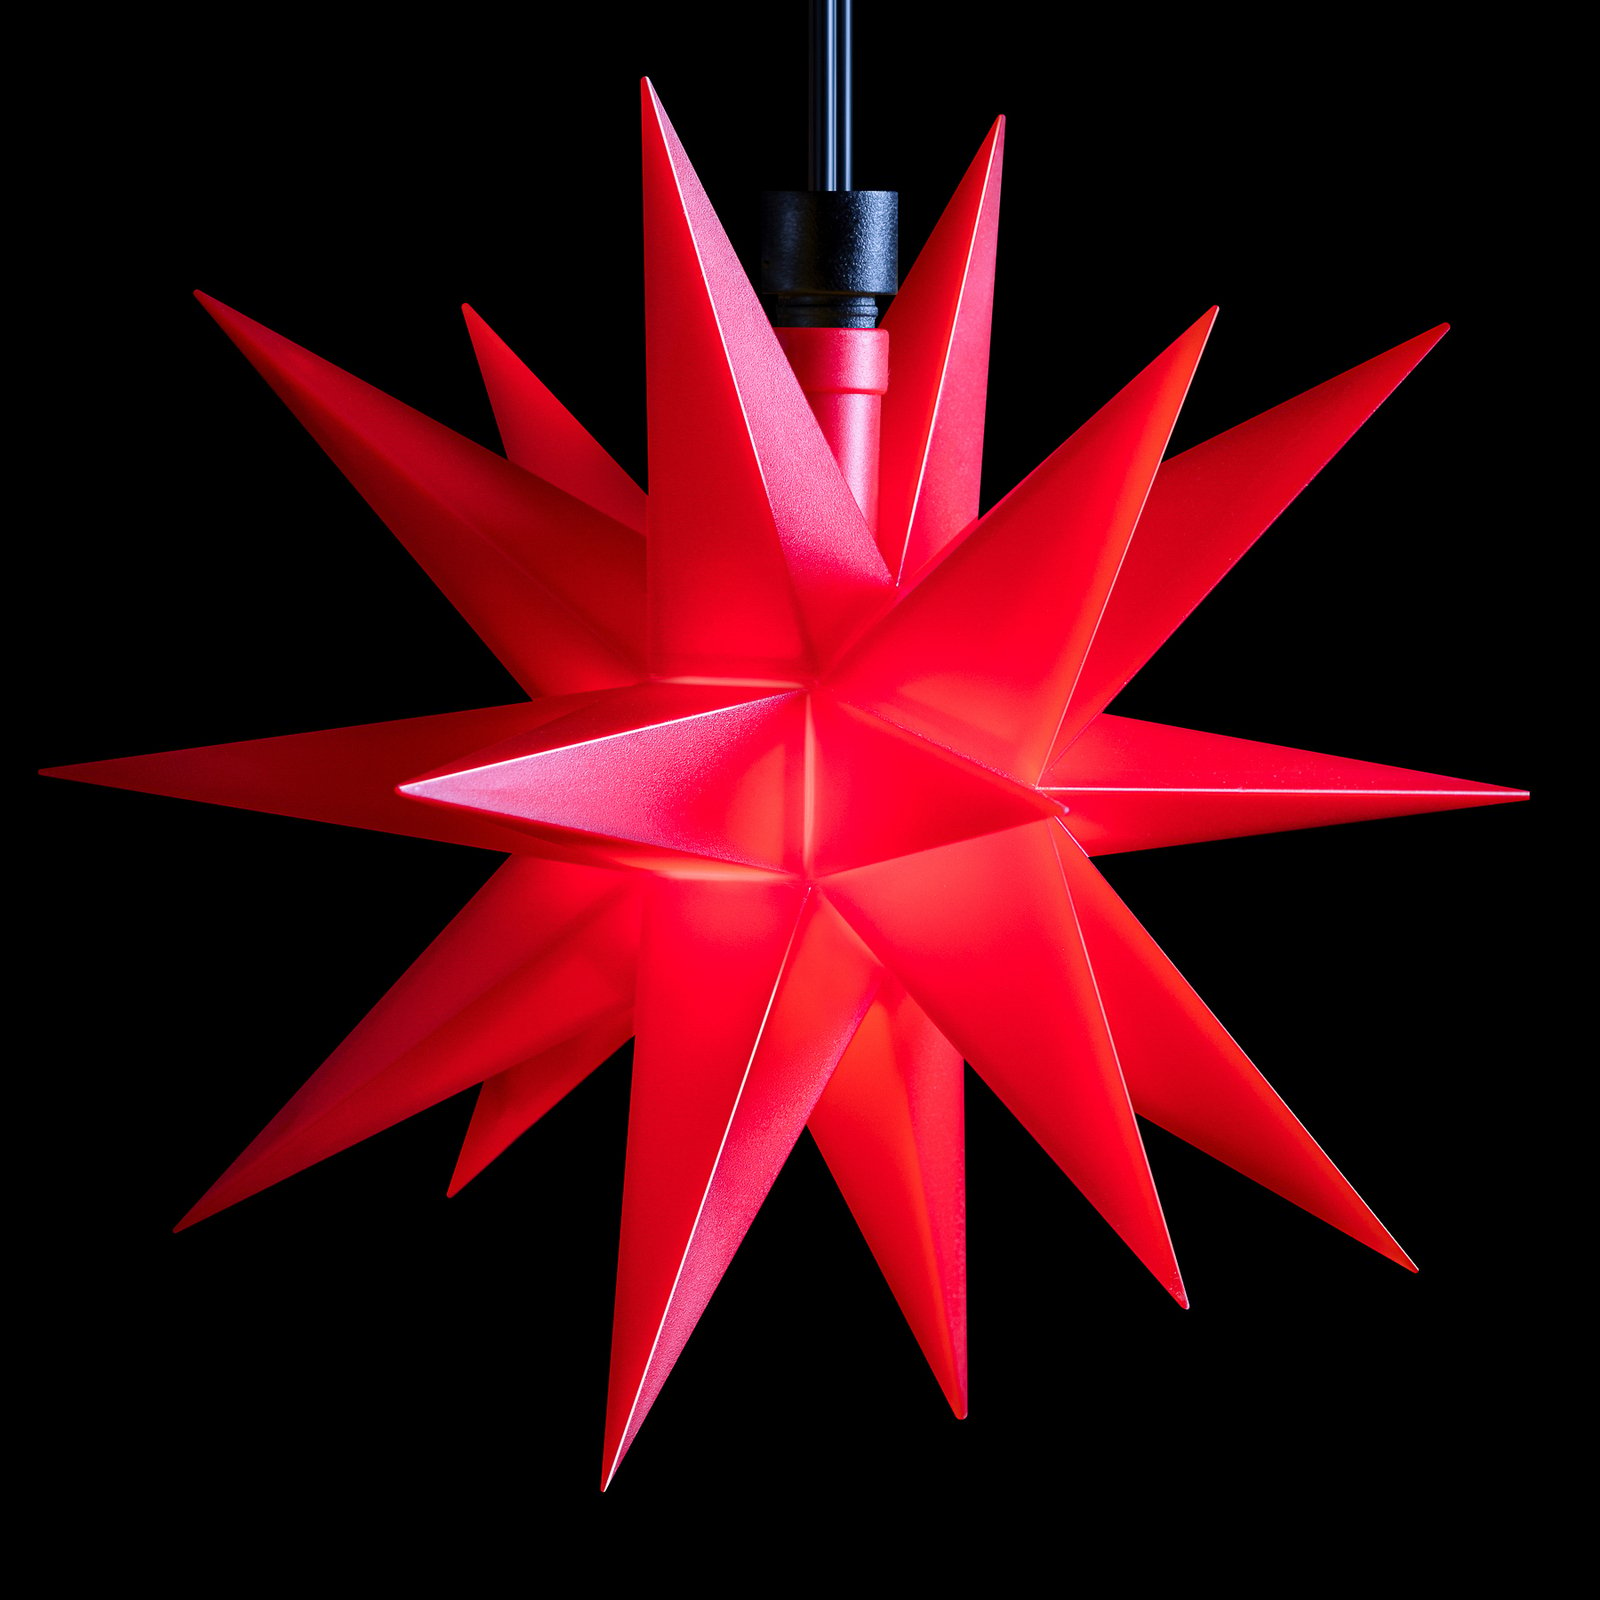 Mini star outdoor LED string lights 3-bulb red